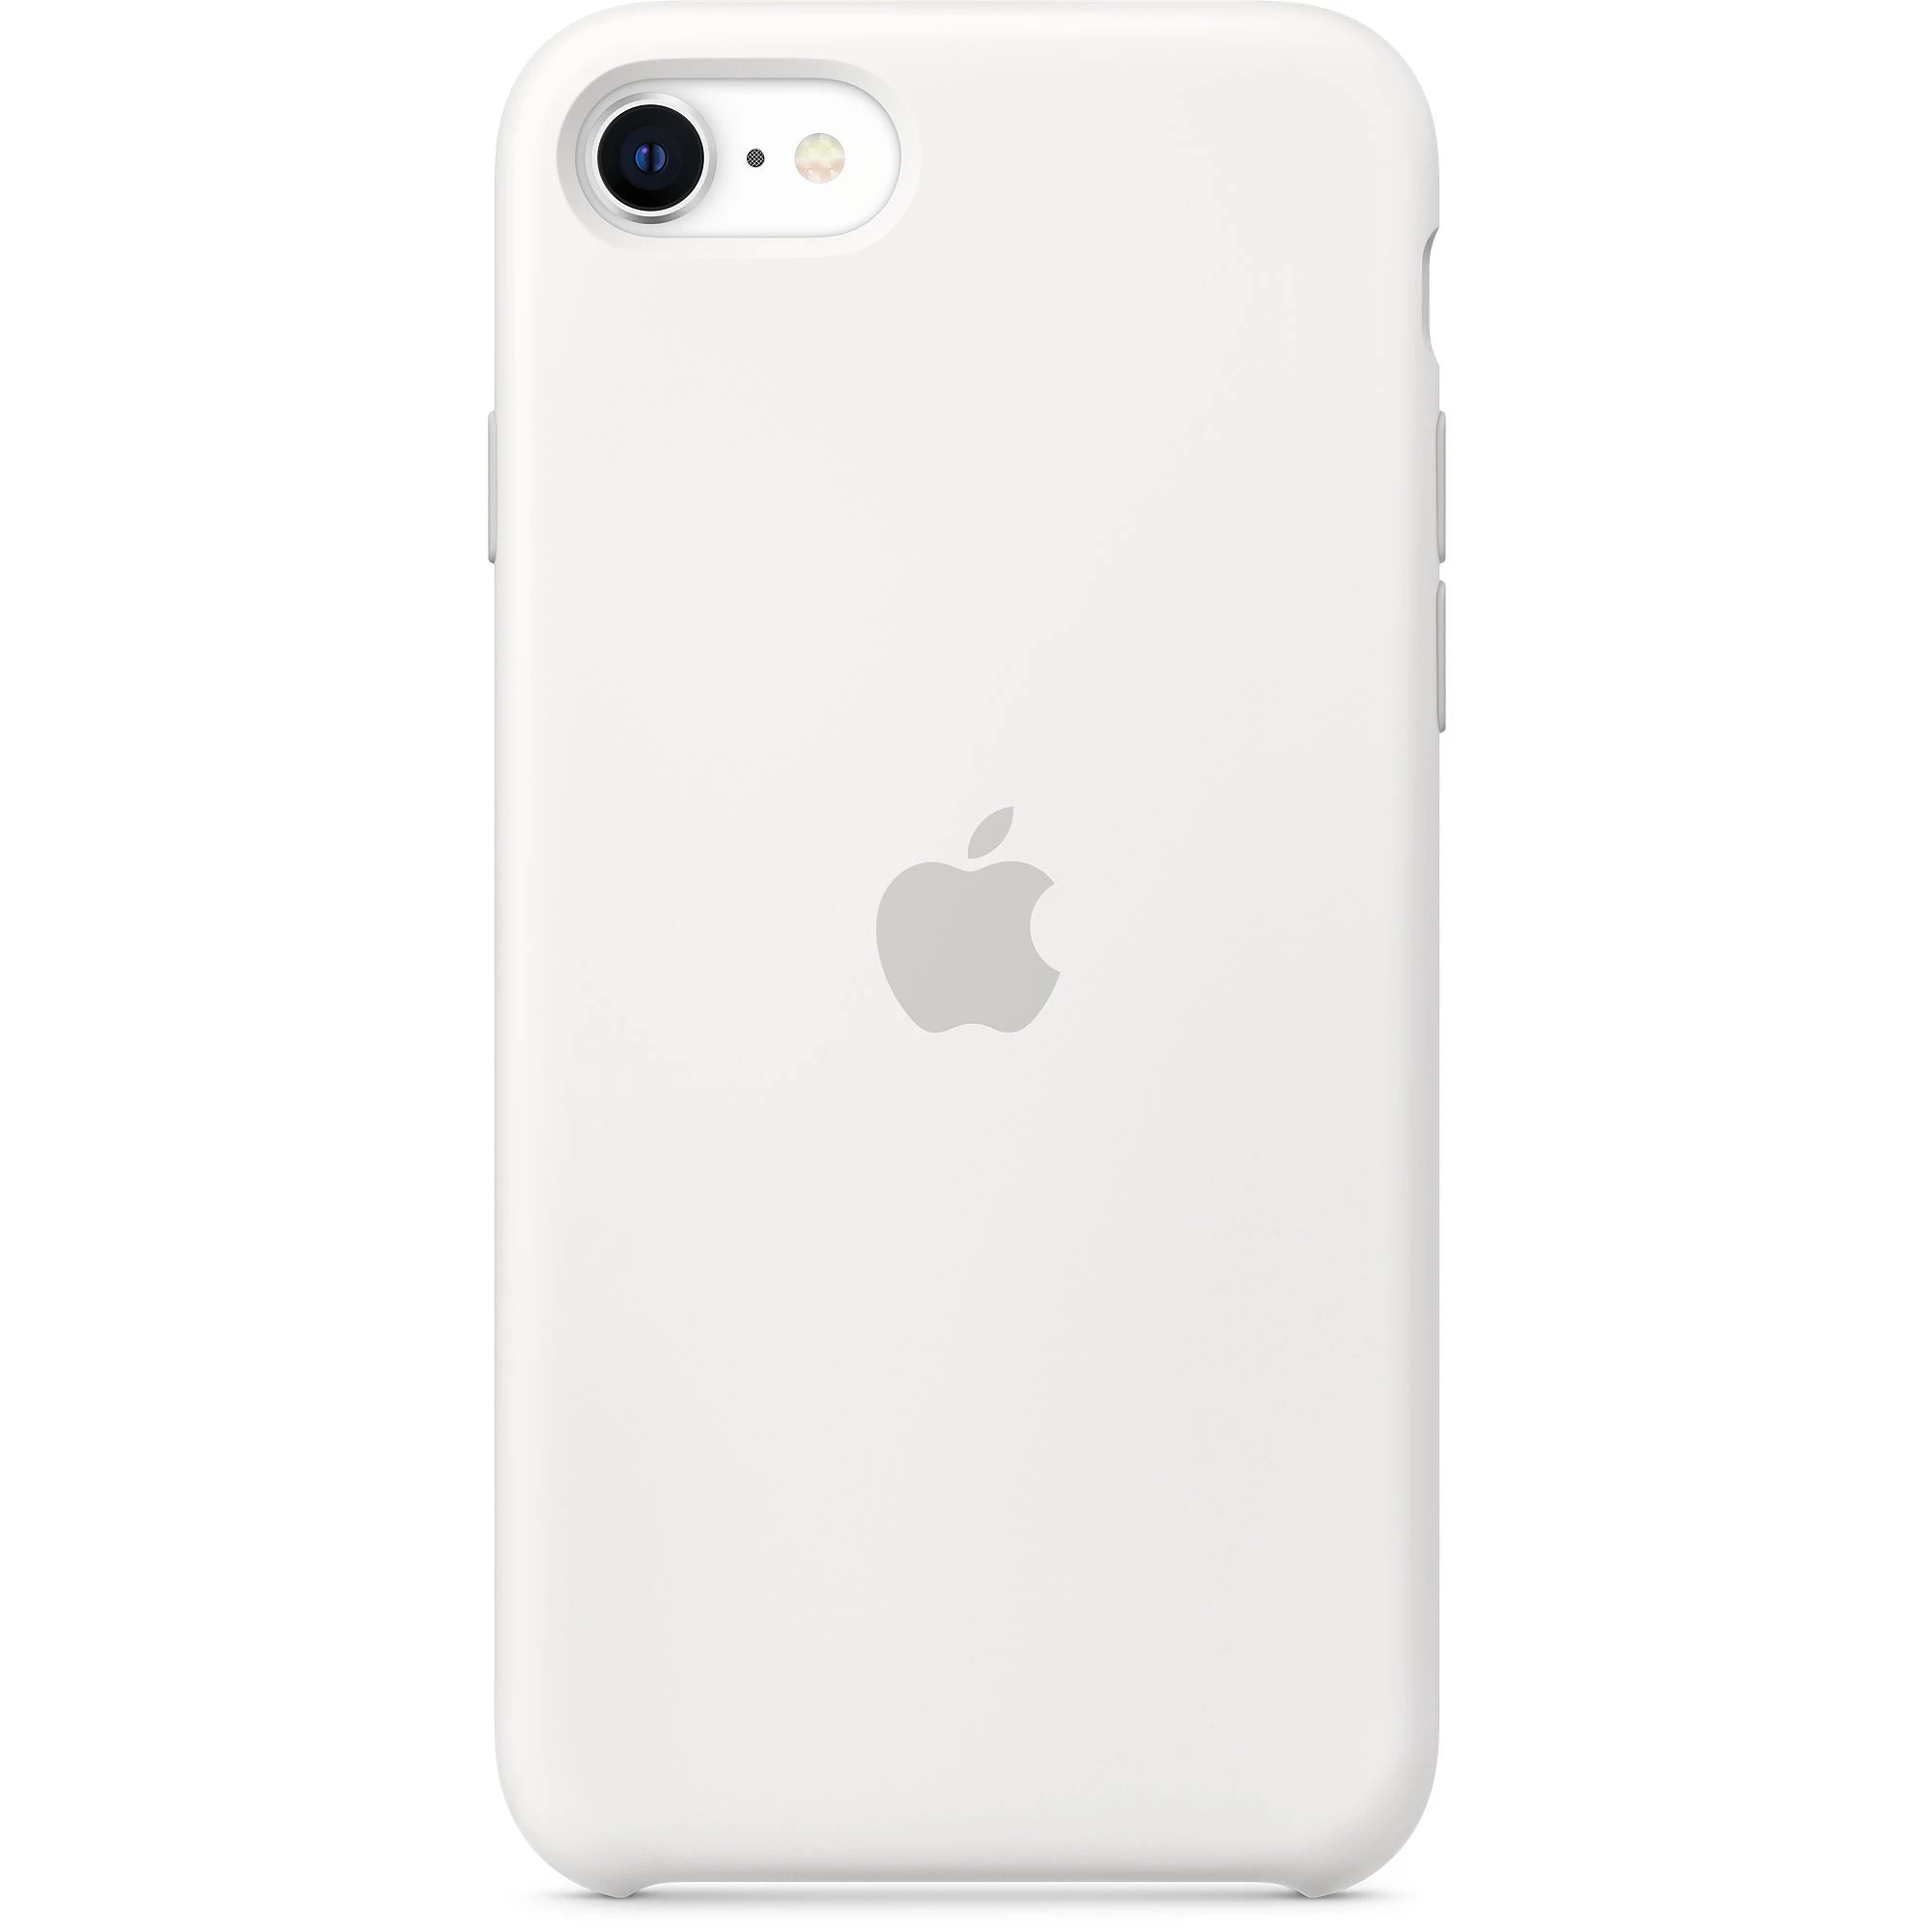 Apple iPhone SE Silicone Case - White (MXYJ2)